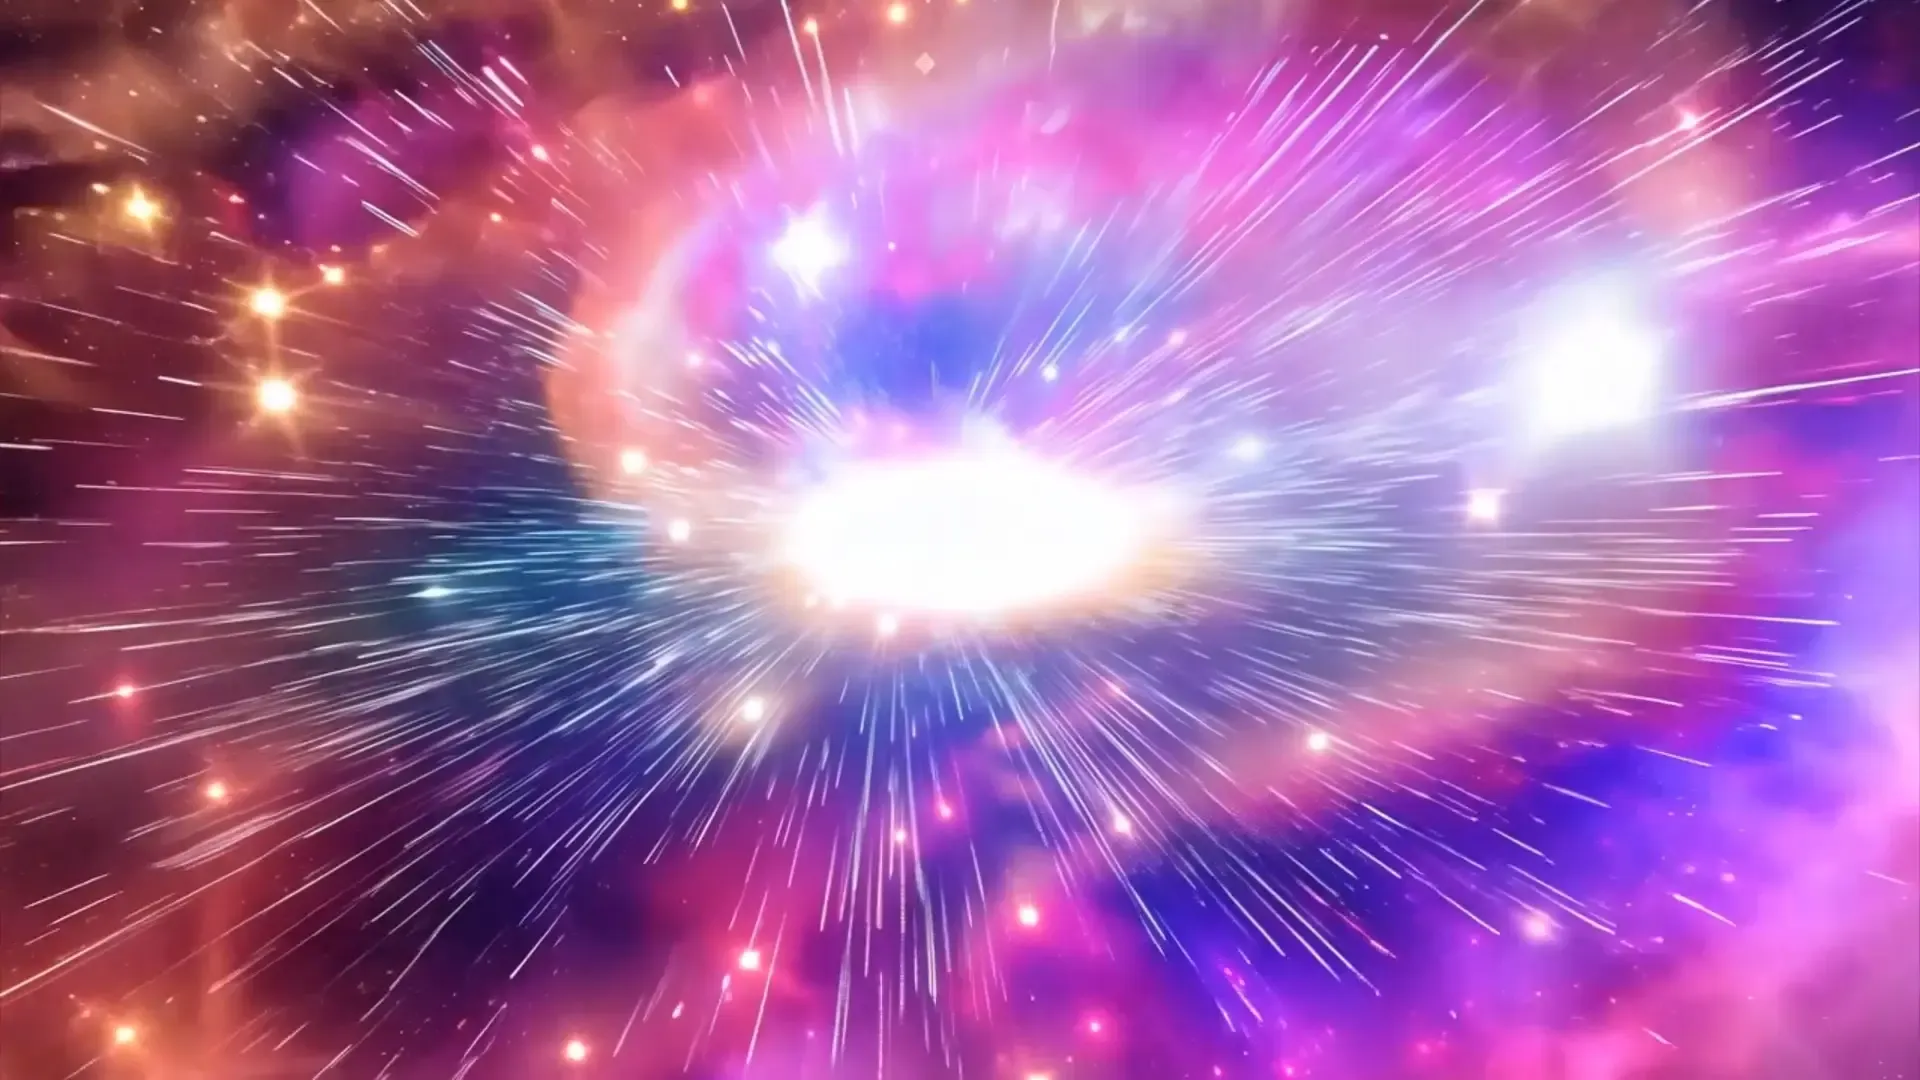 Galactic Burst Overlay with Cosmic Radiance